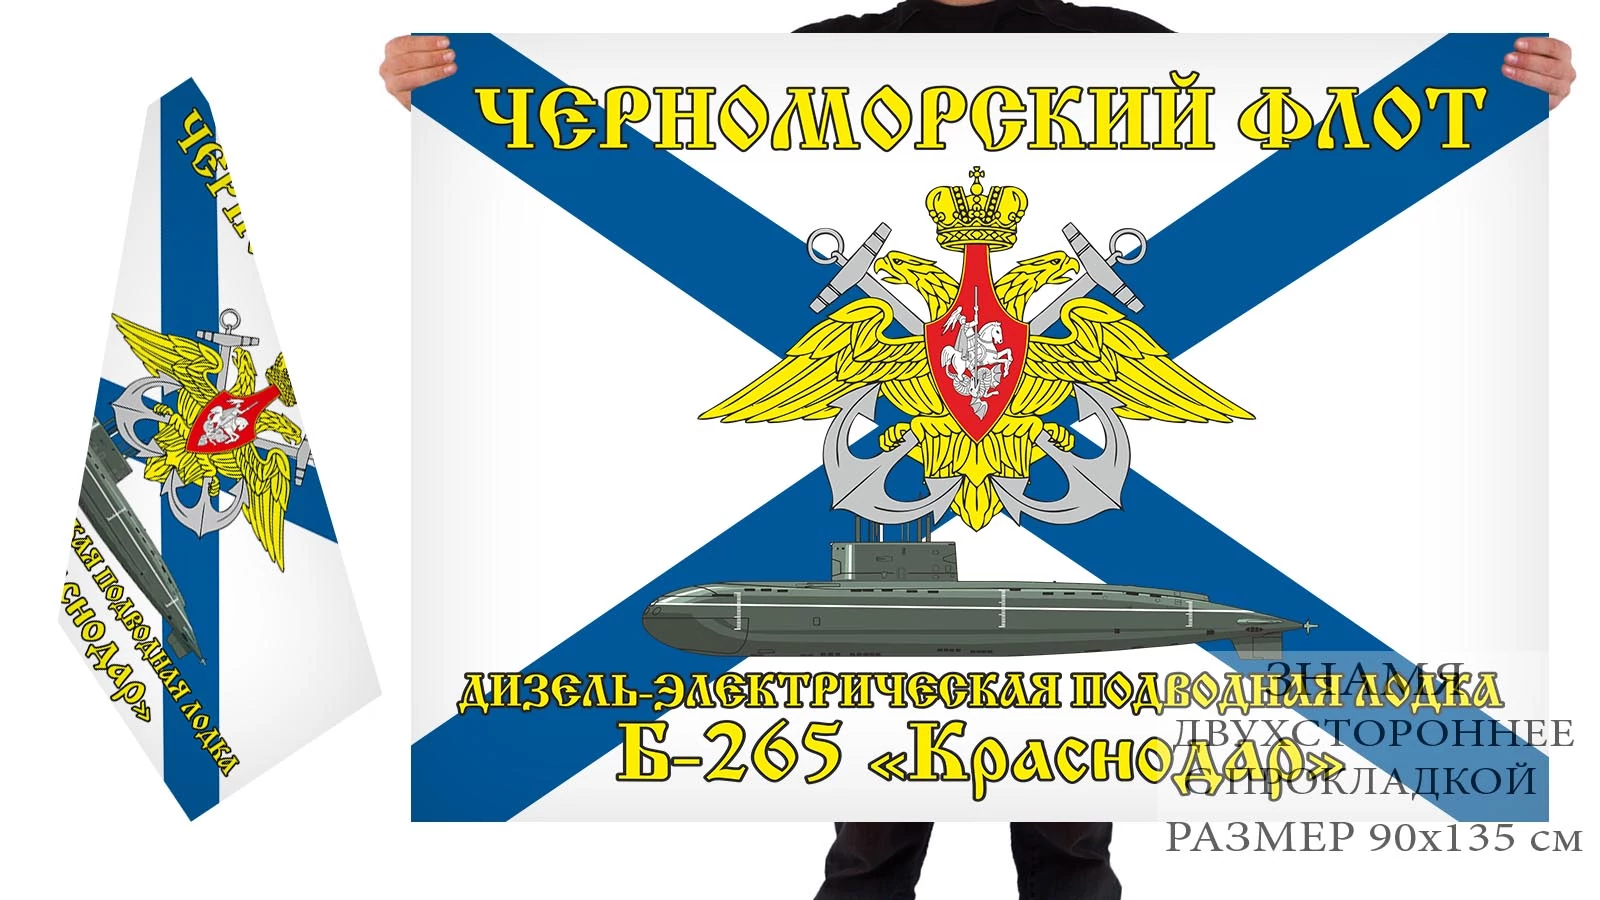 Двустороний флаг ДЭПЛ Б-265 «Краснодар»